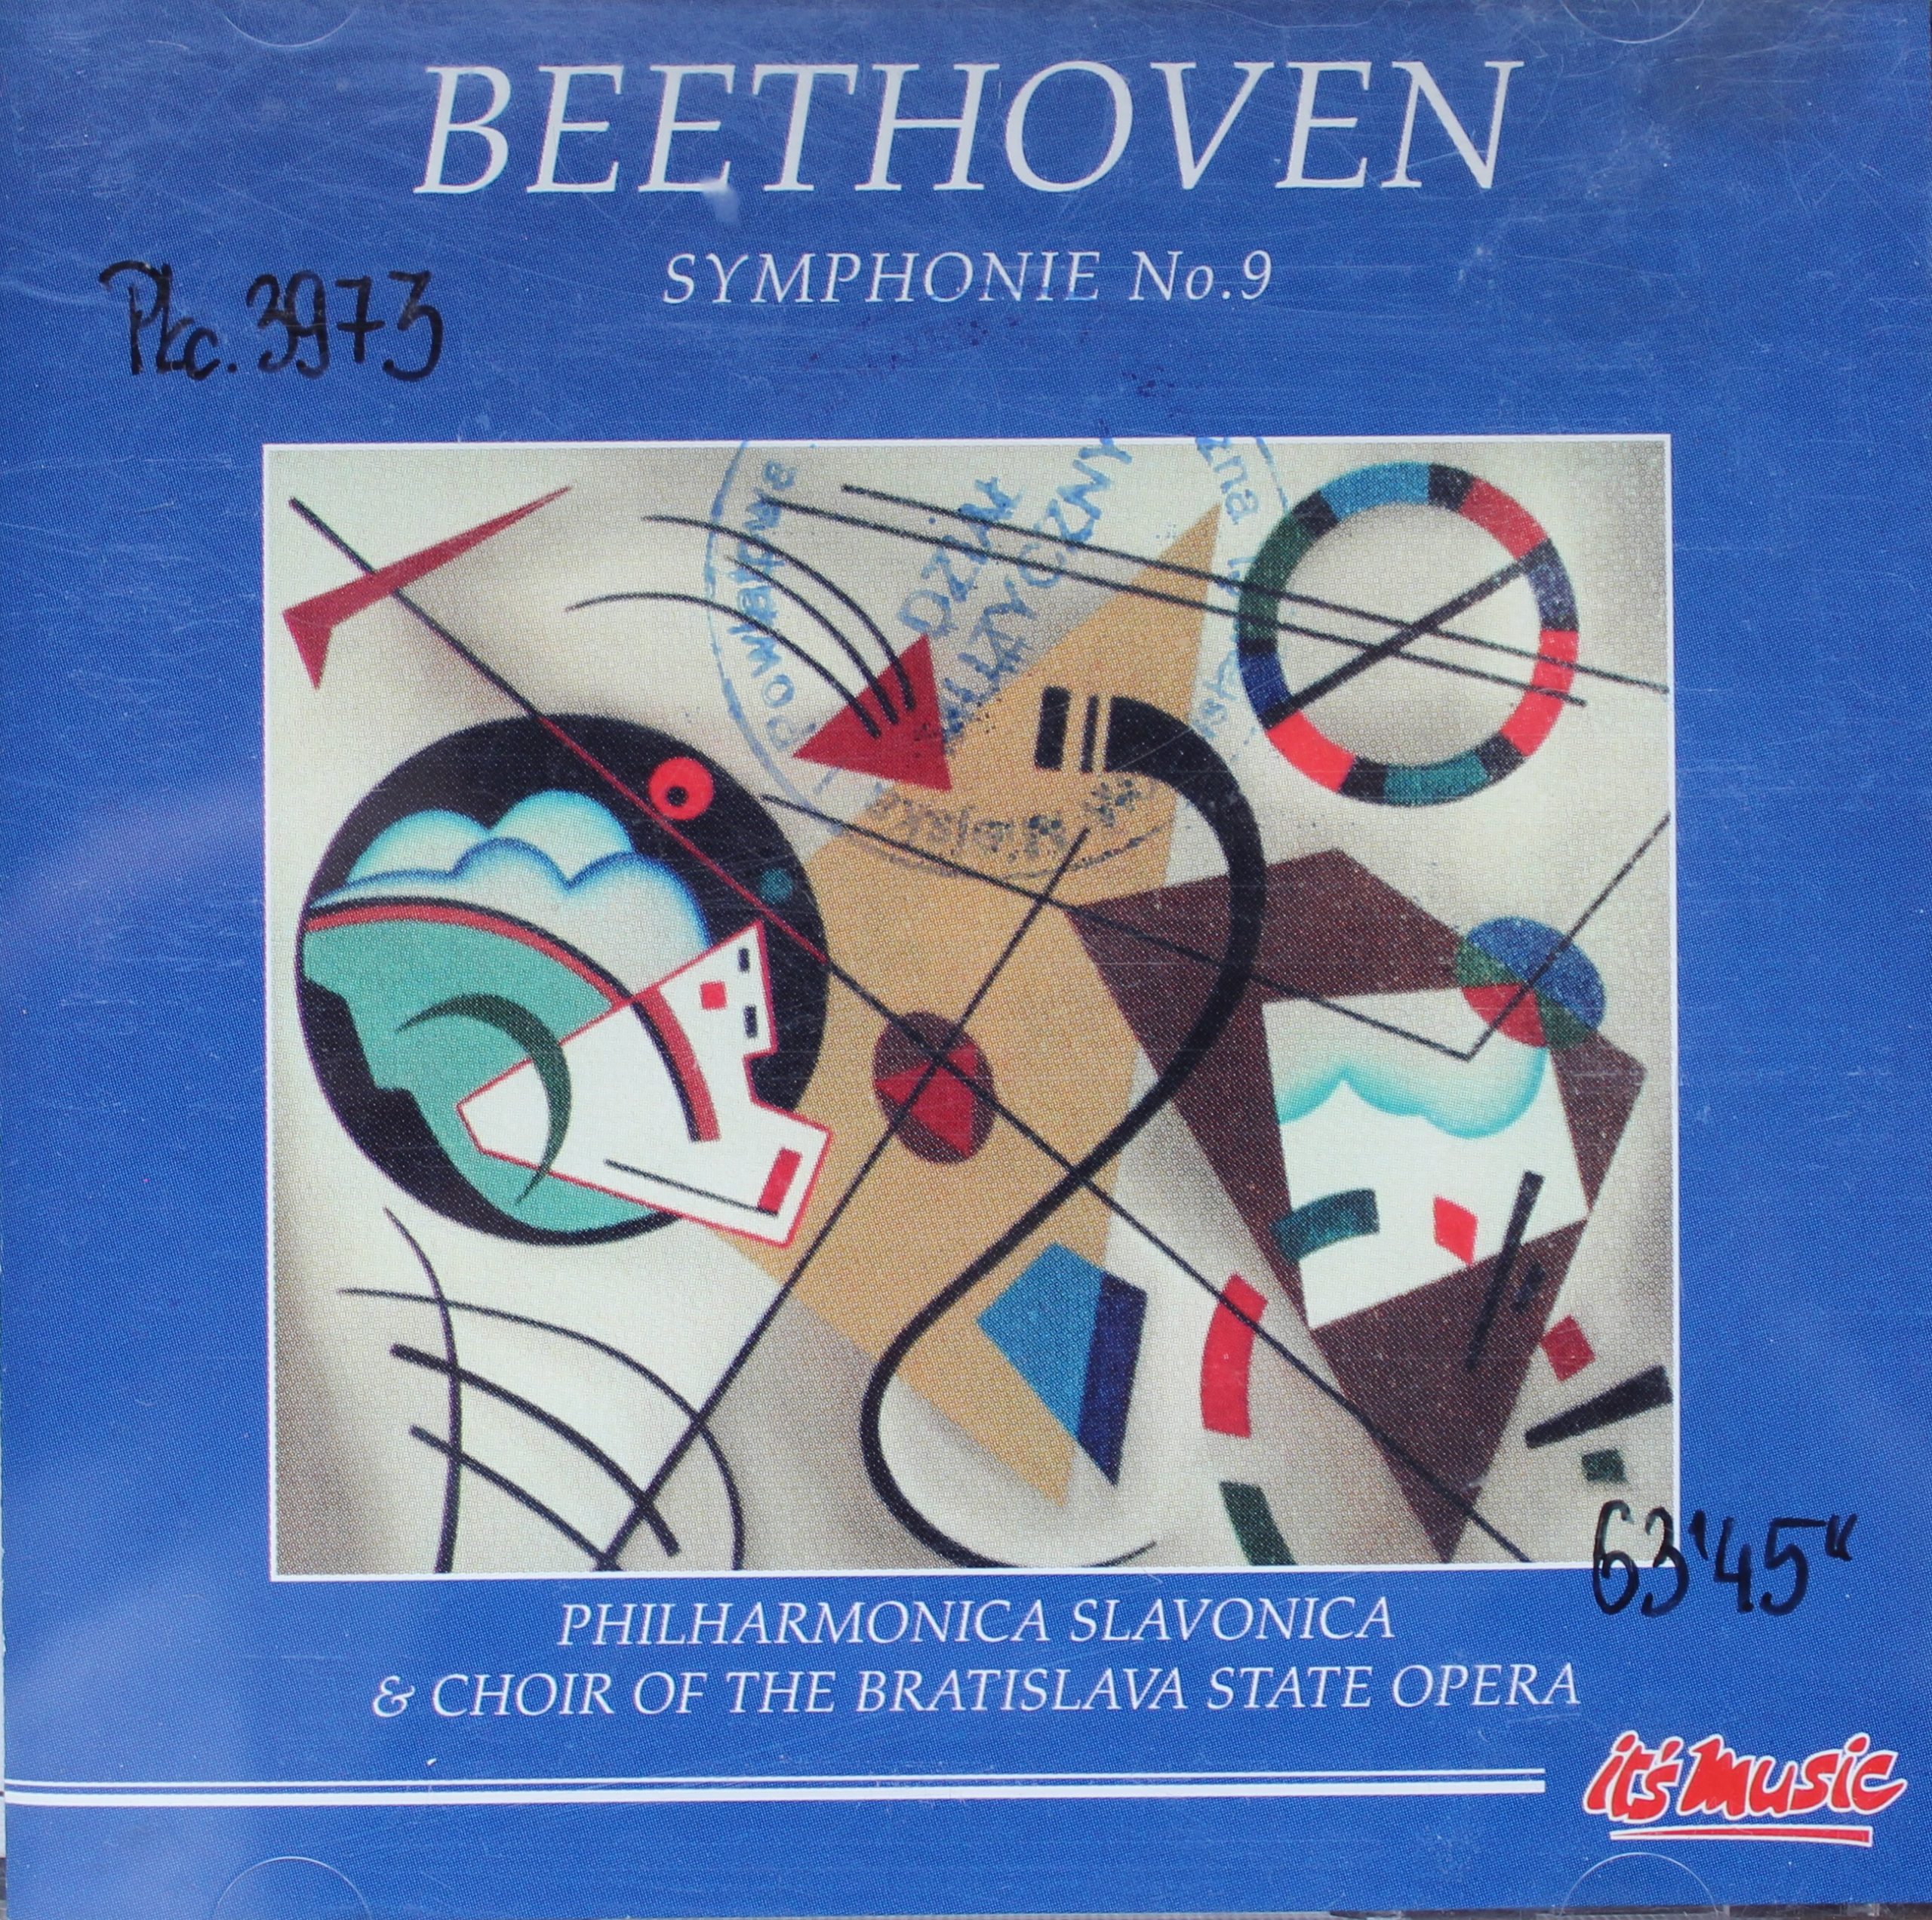 Beethoven – Symphony No. 9